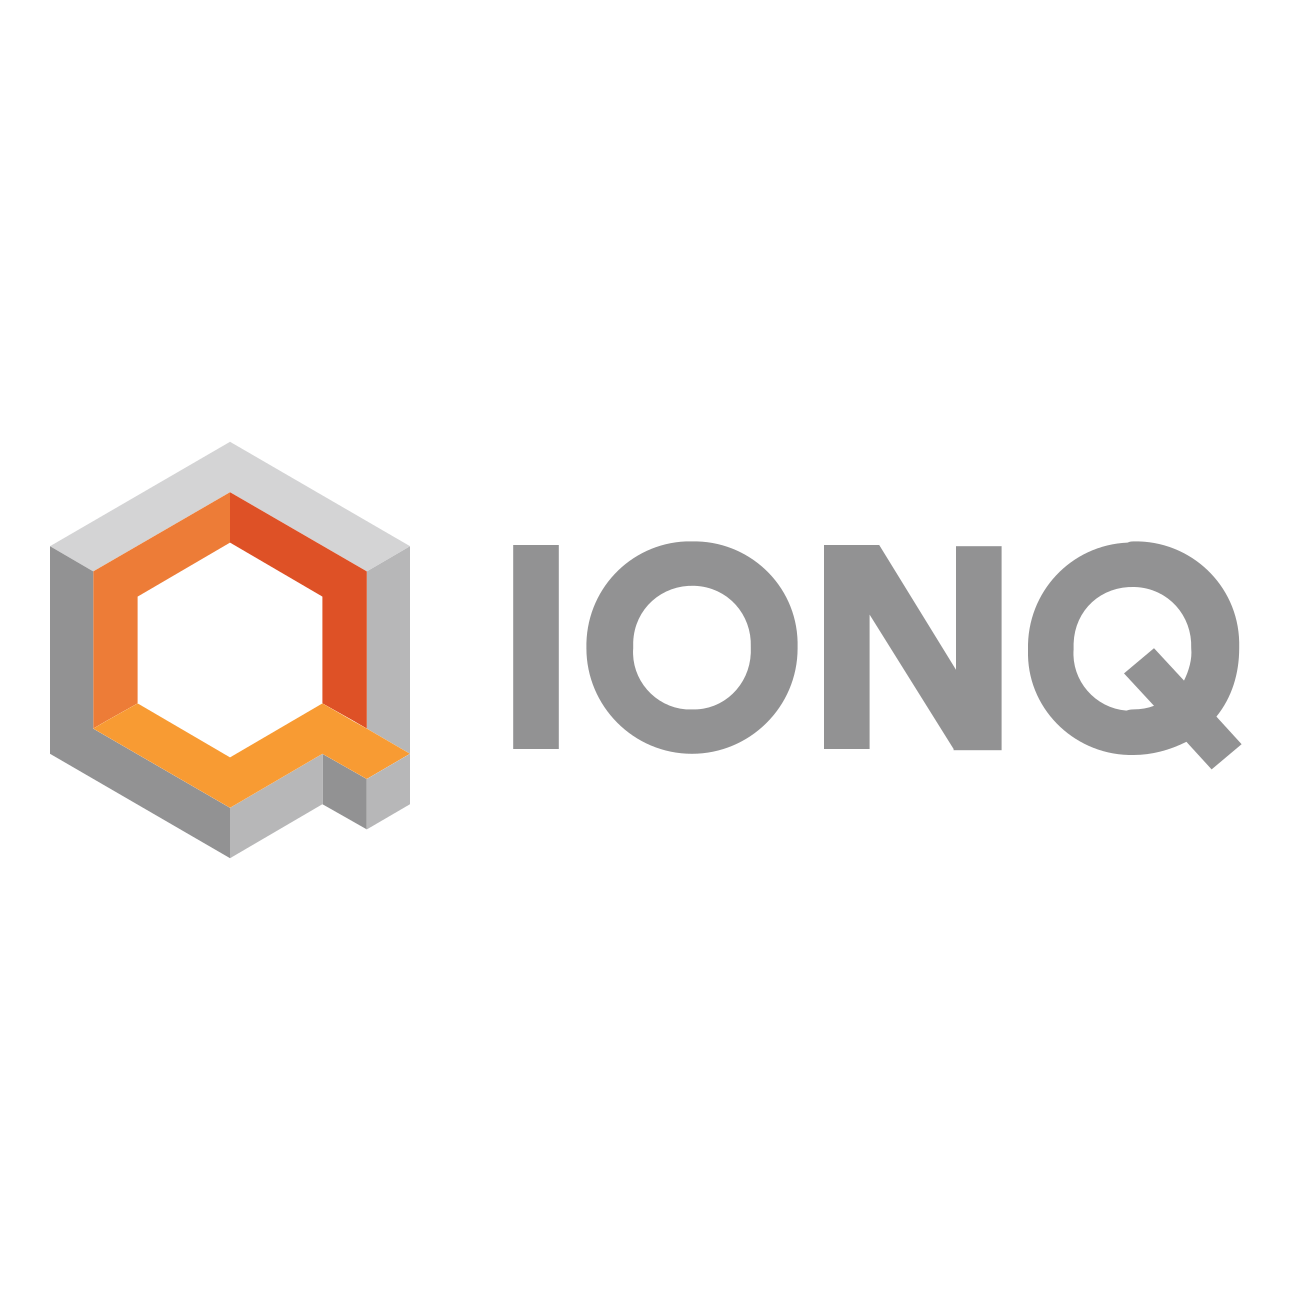 ionq_logo_1